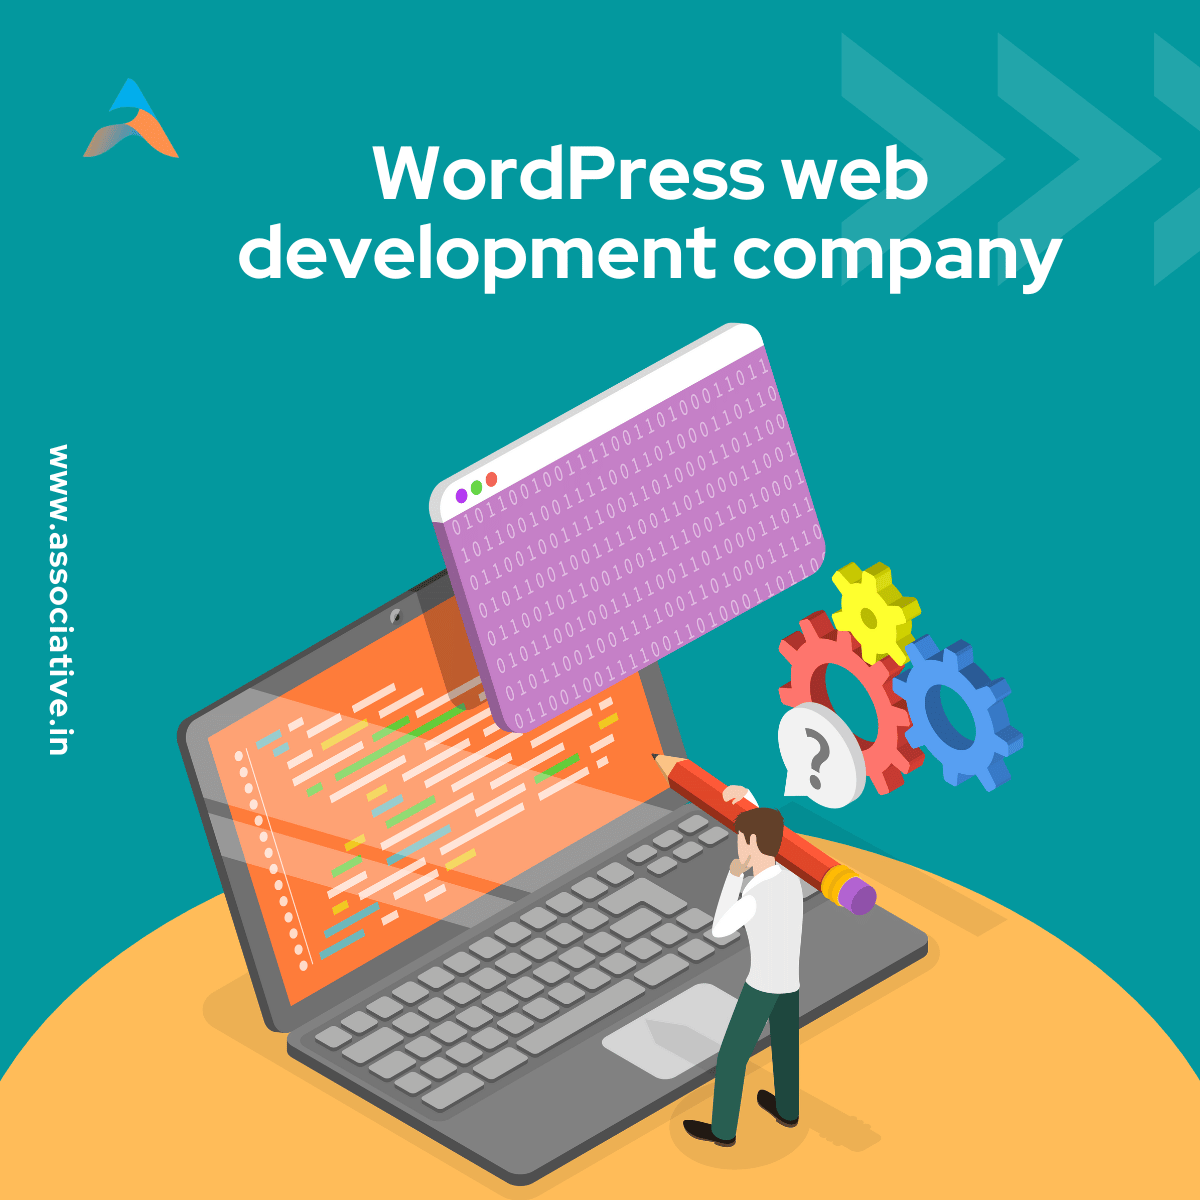 WordPress web development company